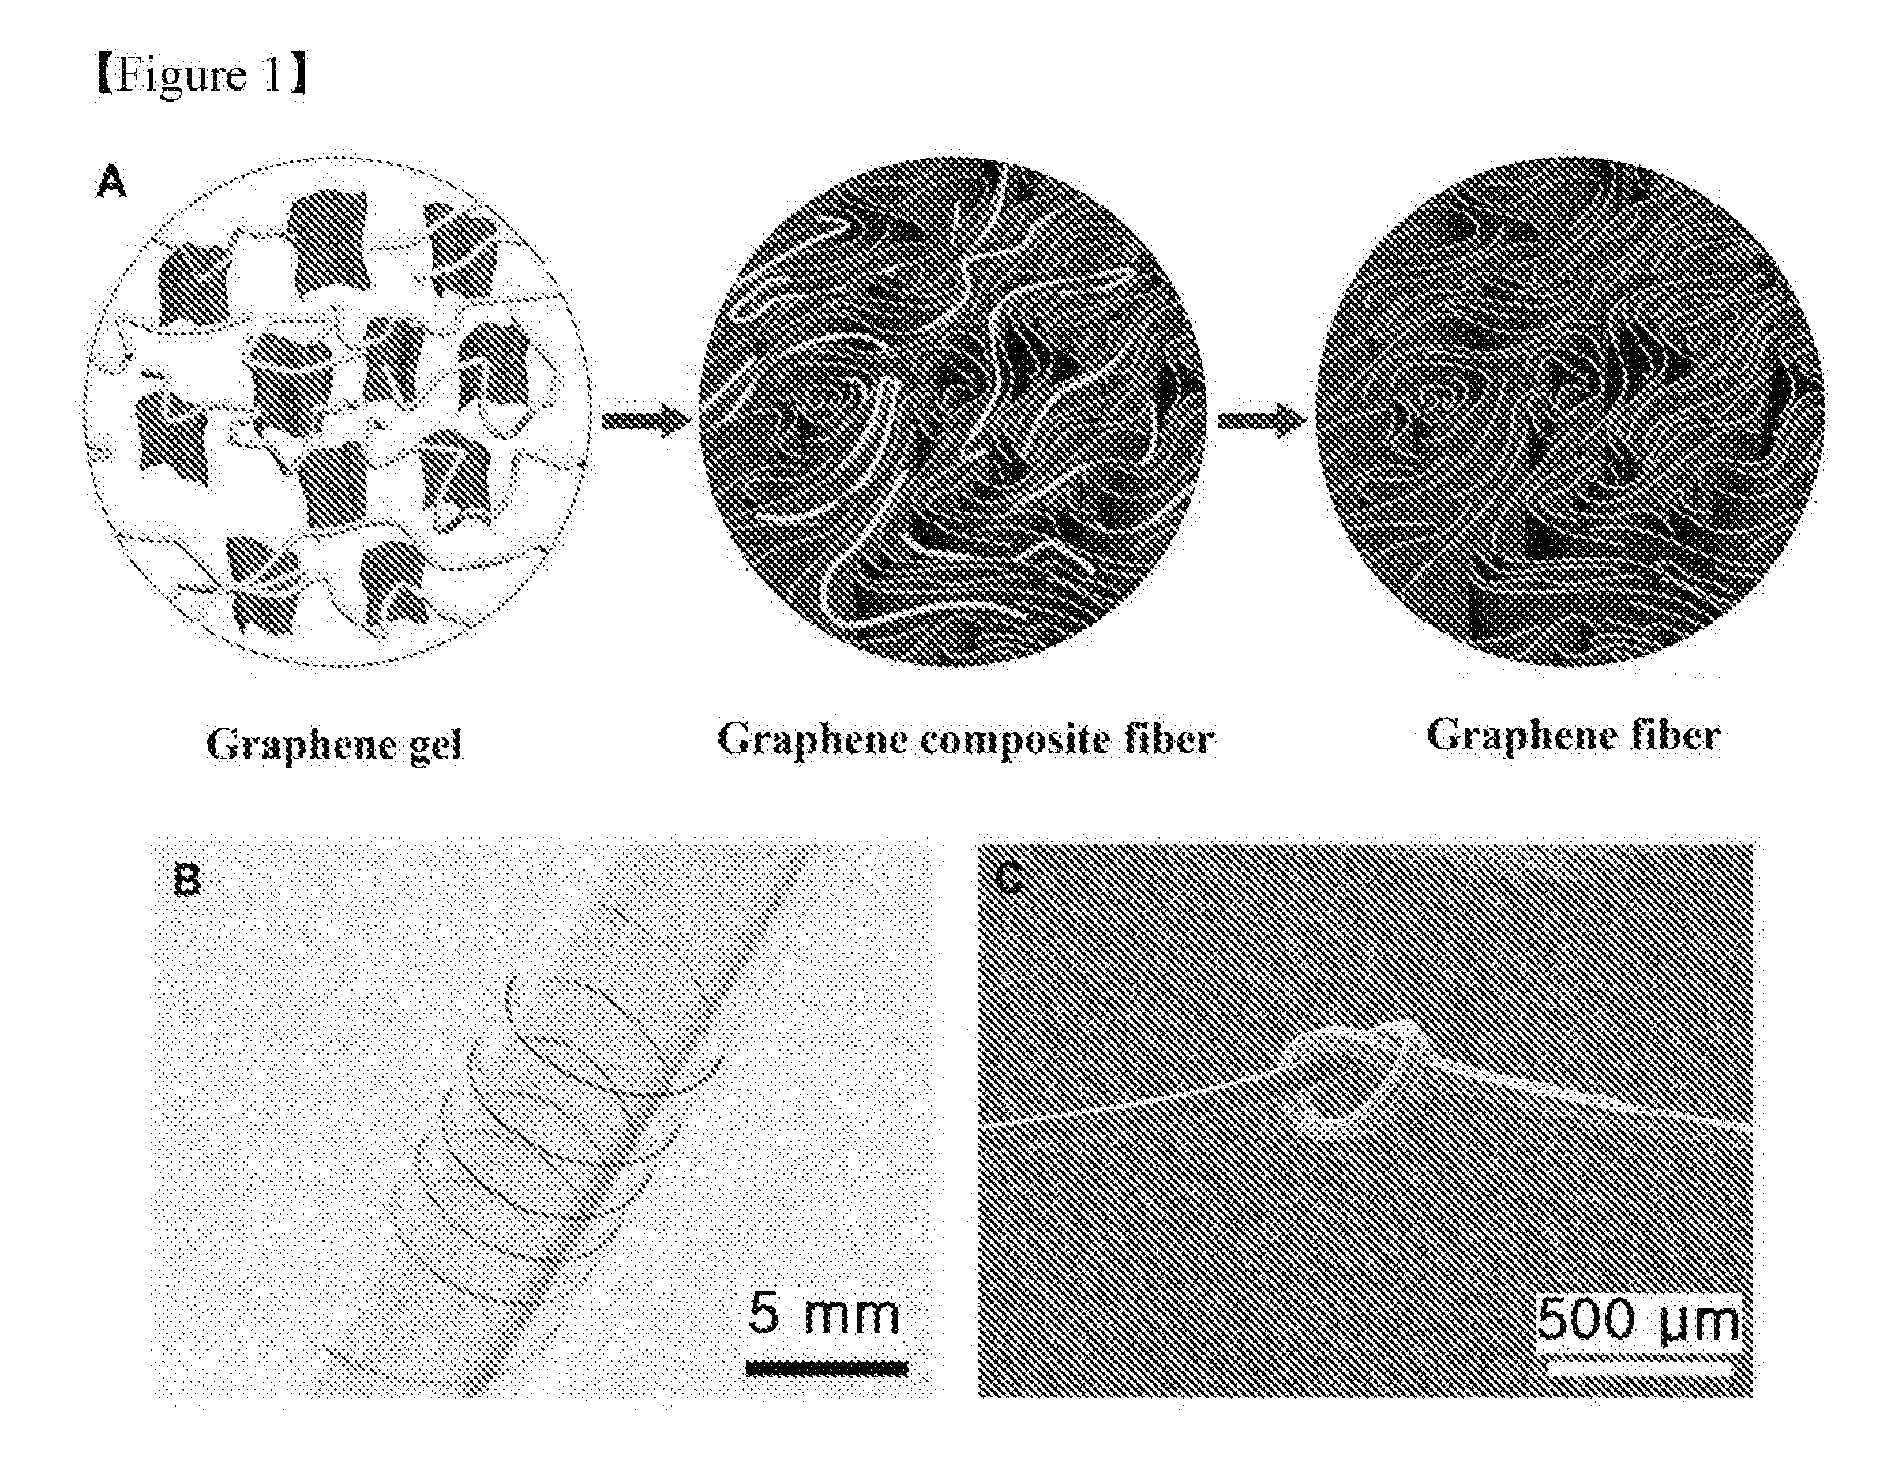 Graphene fiber and method for manufacturing same